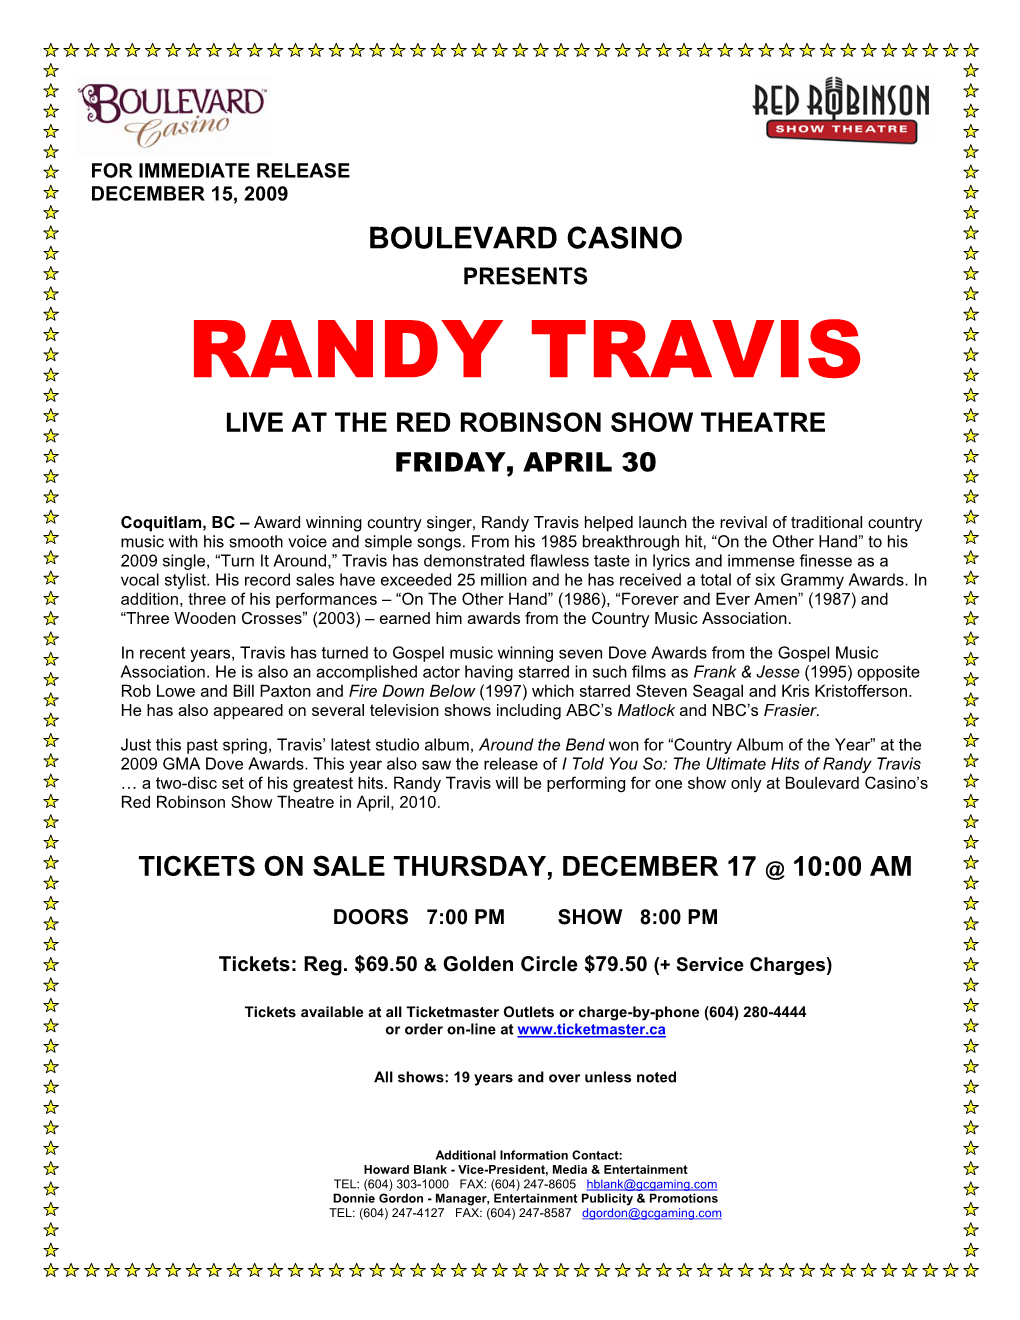 Randy Travis